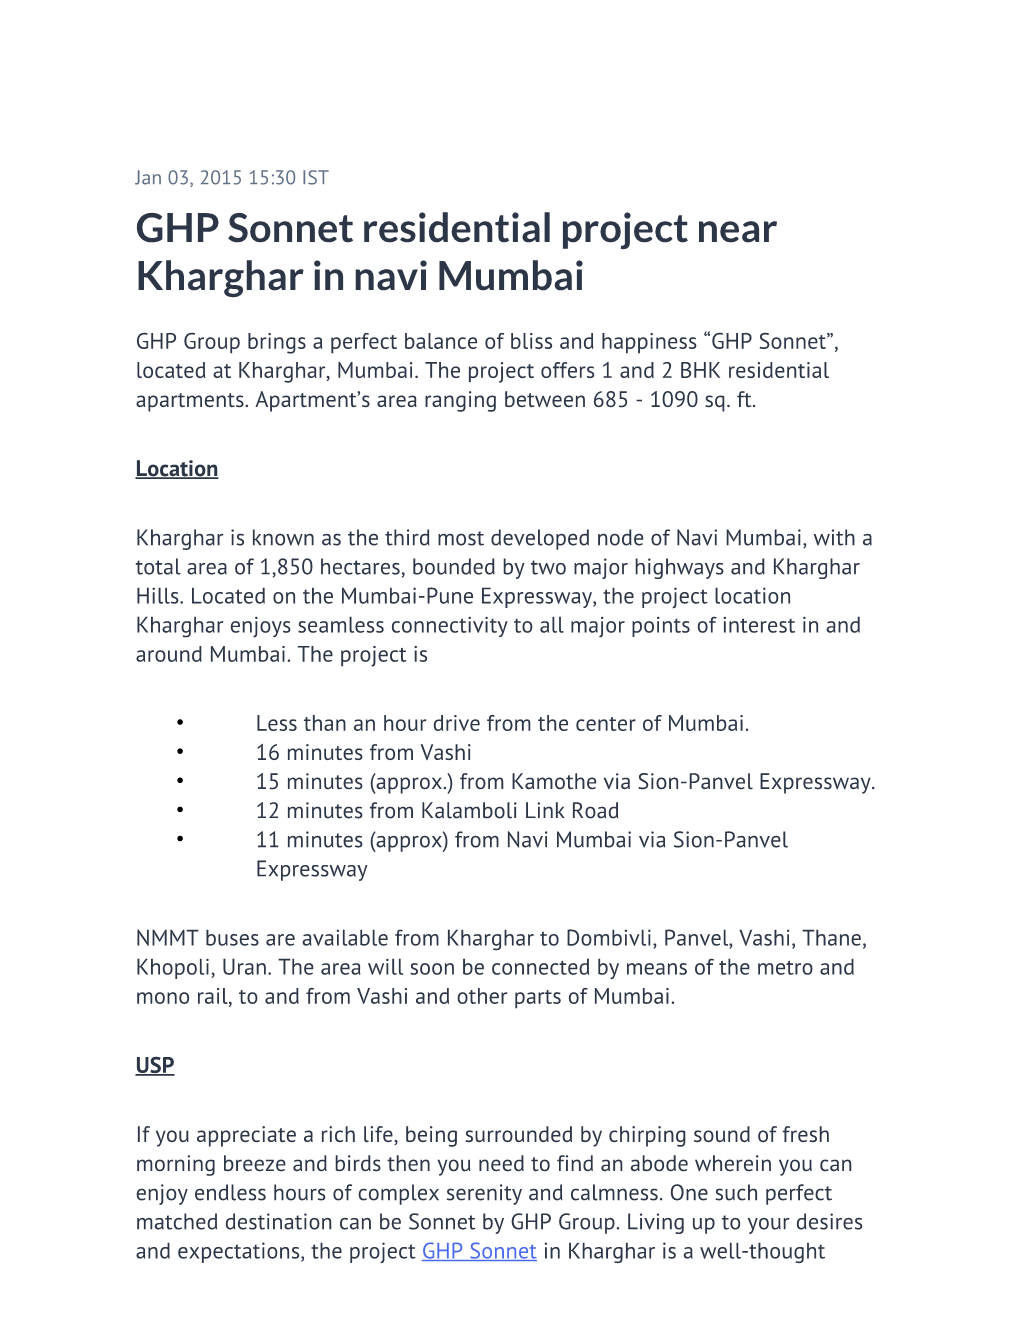 GHP Sonnet Residential Project Near Kharghar in Navi Mumbai